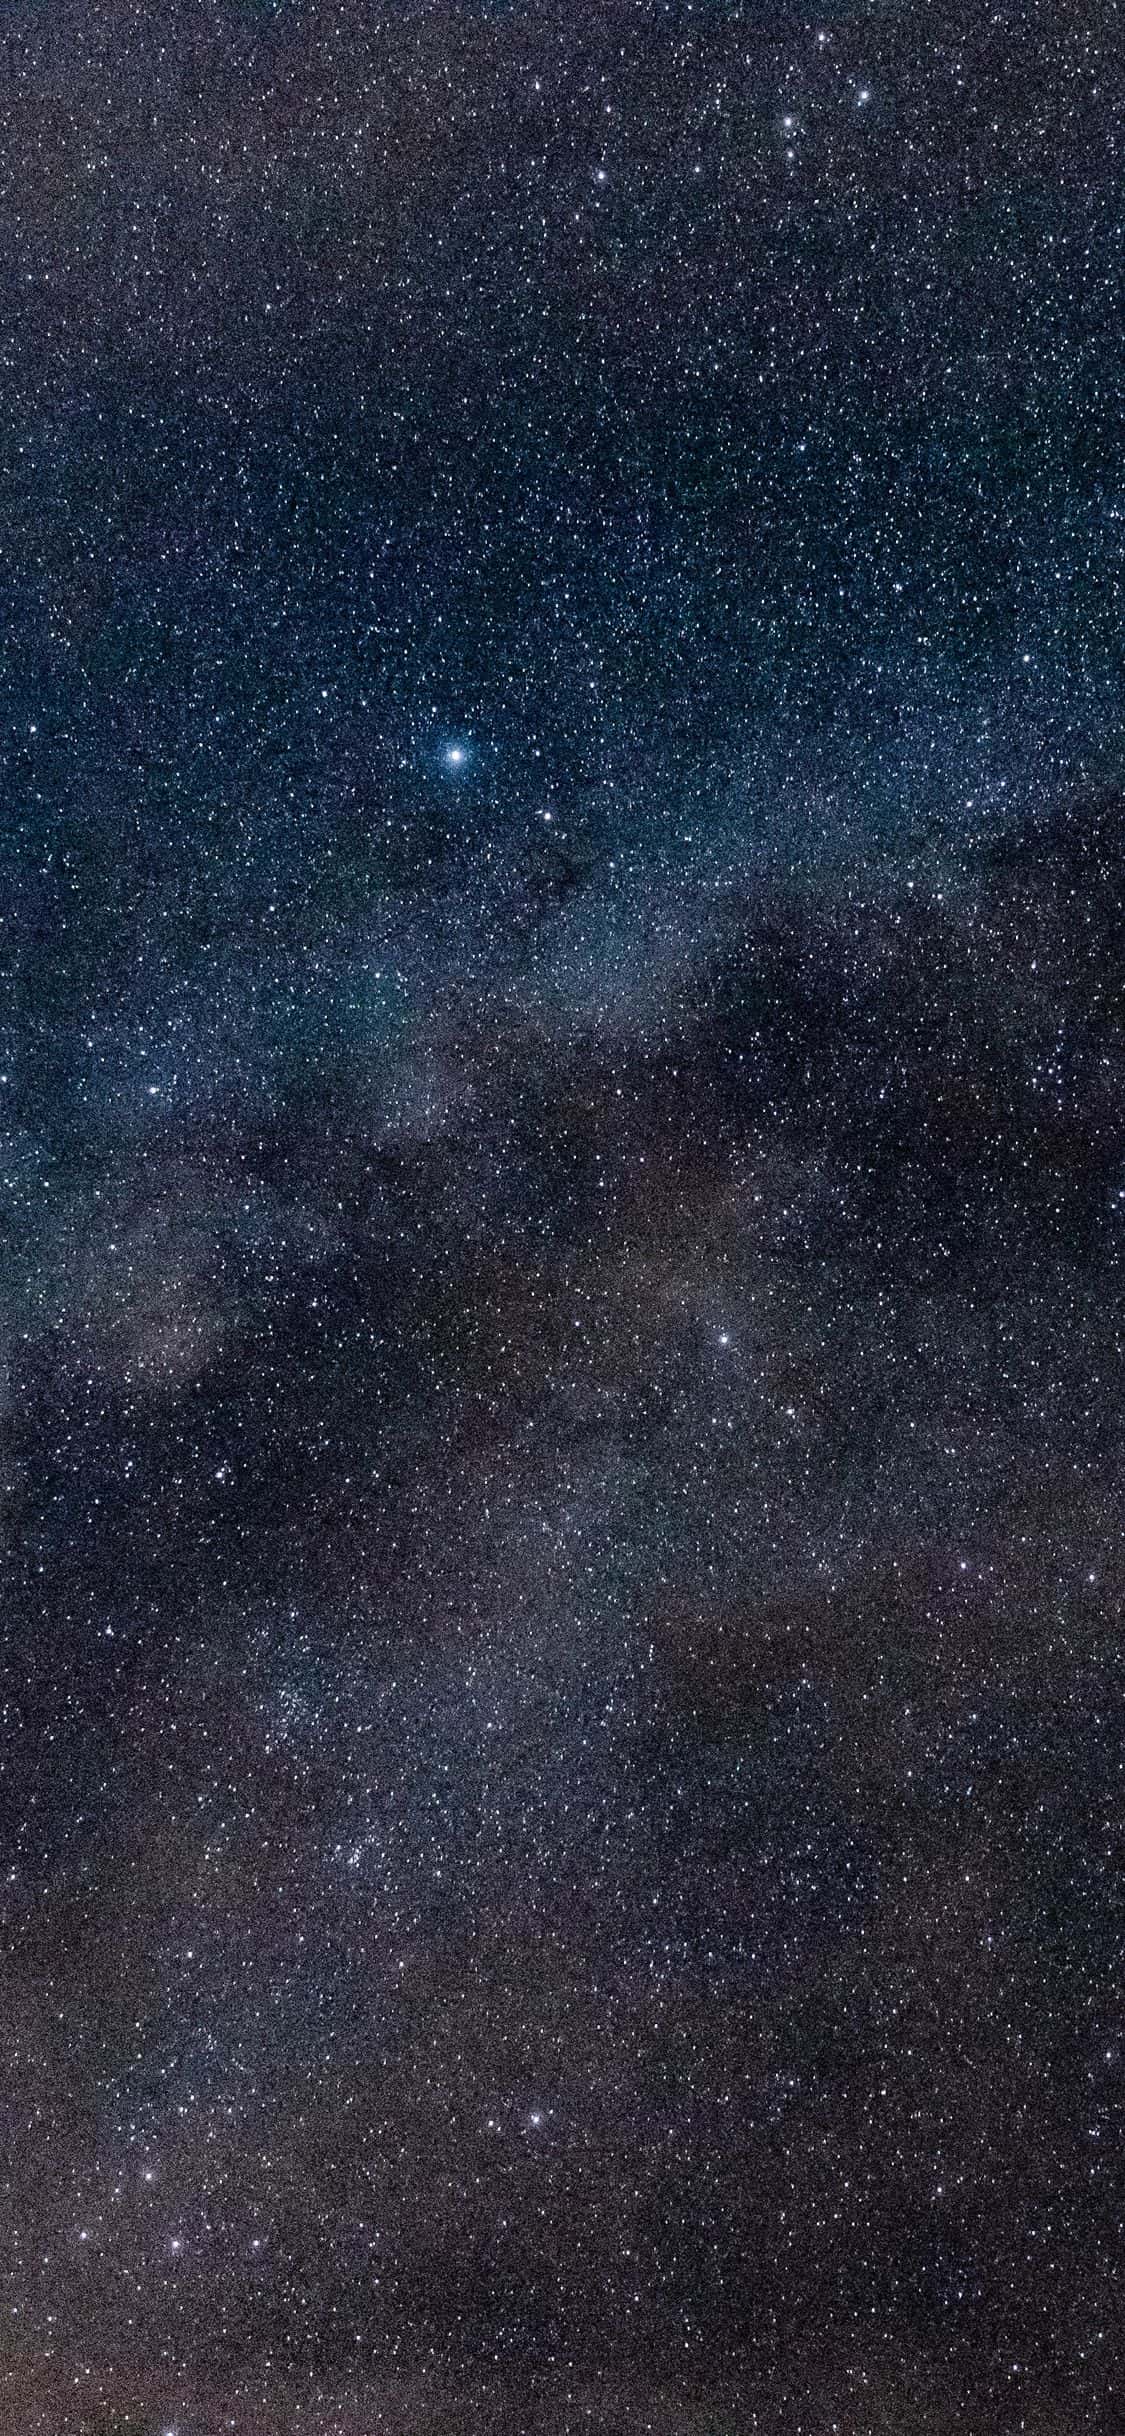 iphone wallpaper full hd,blau,schwarz,himmel,atmosphäre,astronomisches objekt